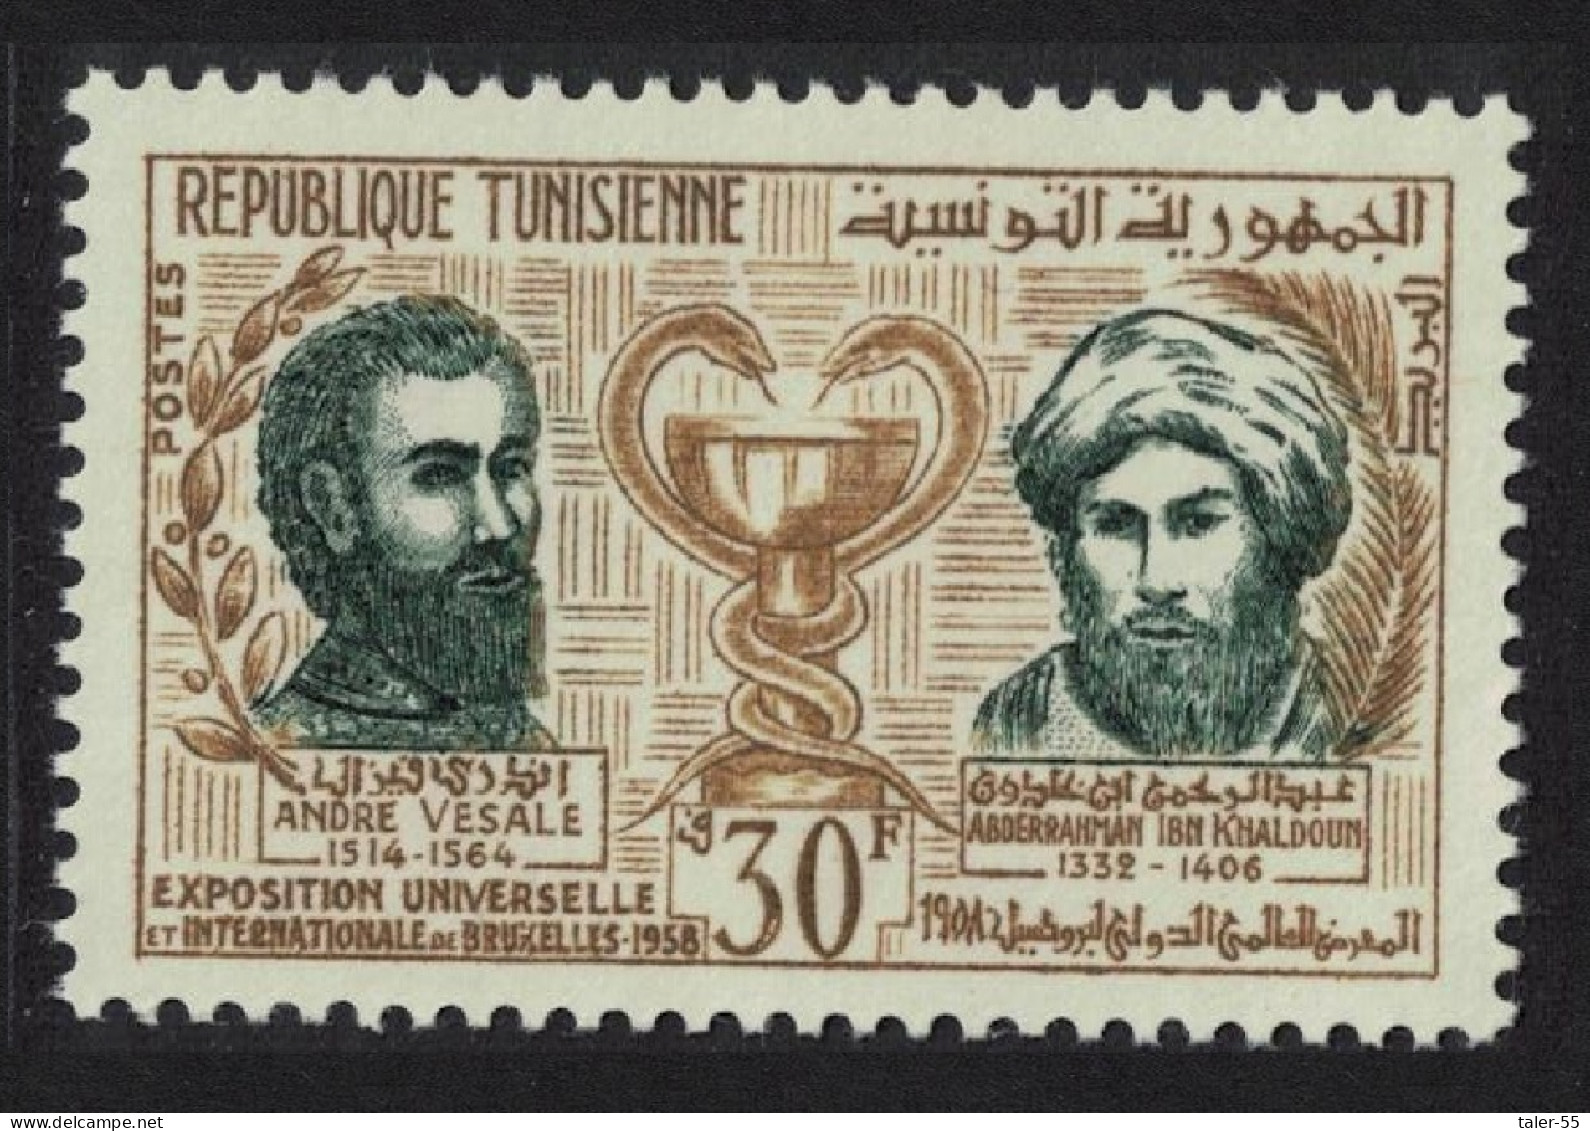 Tunisia Vesalius Ibn Khaldoun Brussels International Exhibition 1958 MNH SG#462 Sc#320 - Tunesien (1956-...)